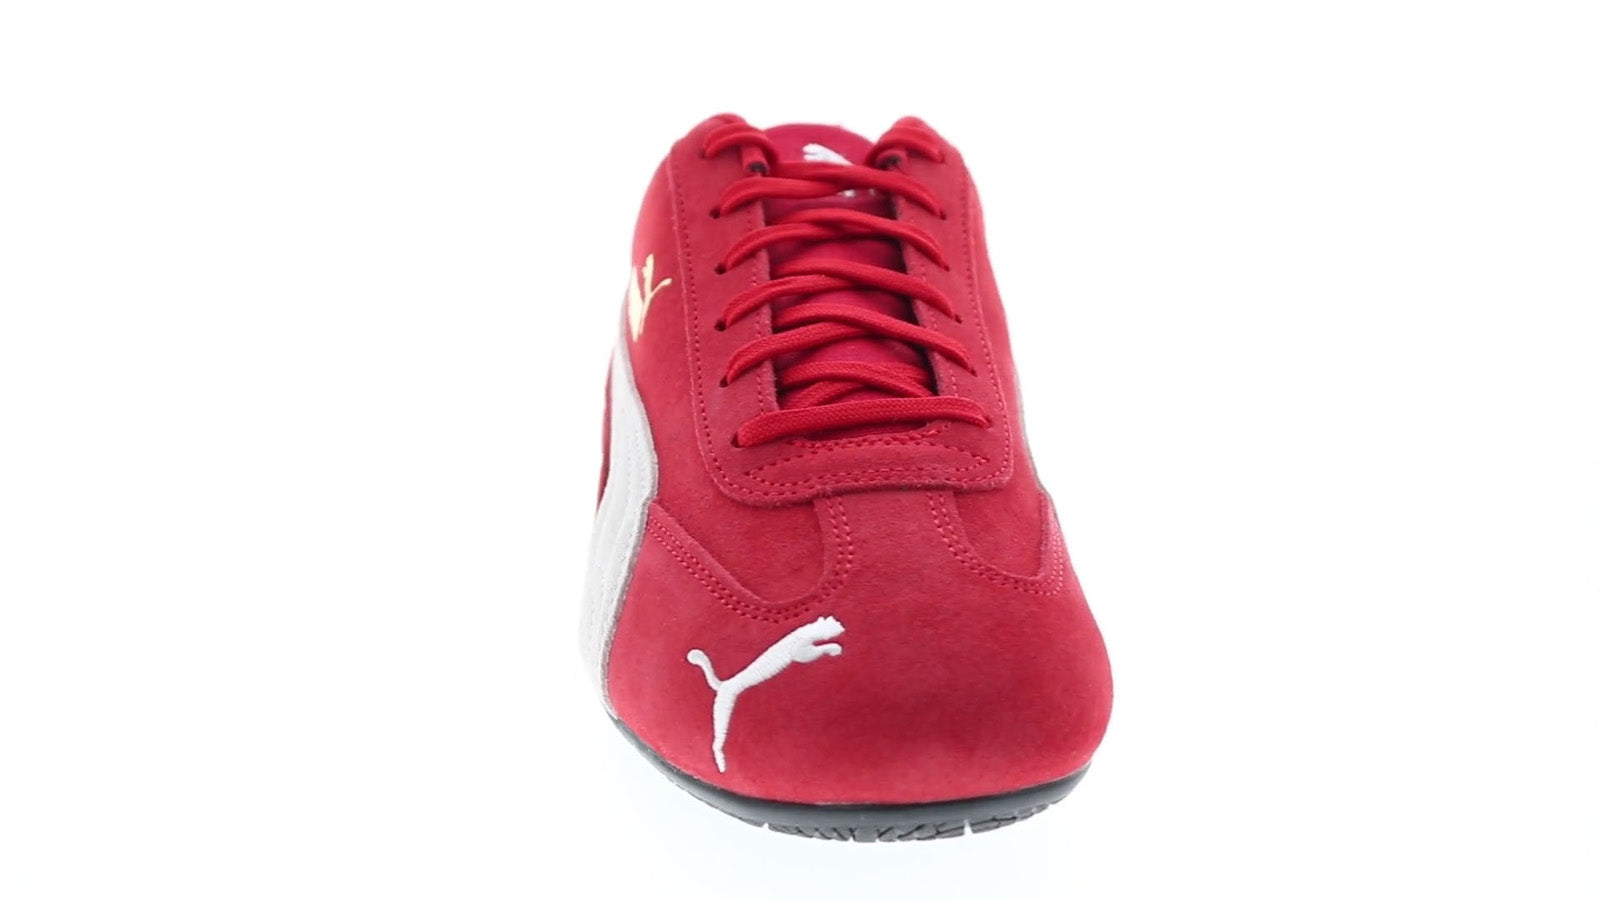 Puma Speedcat LS Red Motorsport Inspired Sneakers Shoe - Ruze Shoes